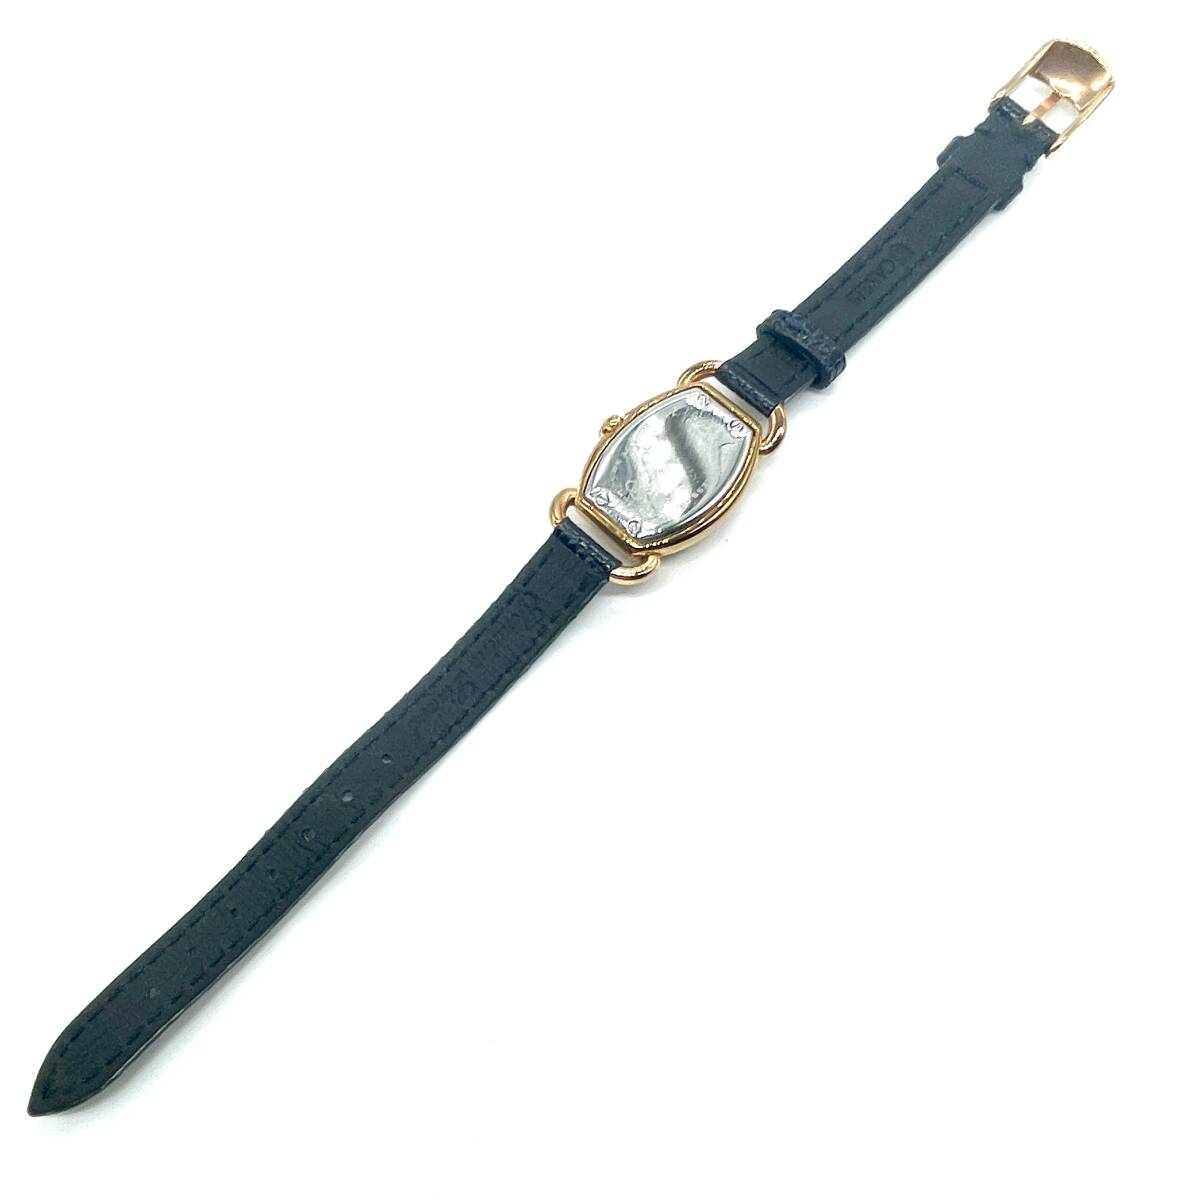  beautiful goods operation goods LINKS OF LONDON links o Blond n Driver quartz wristwatch Gold leather belt jewelry watch tonneau type 